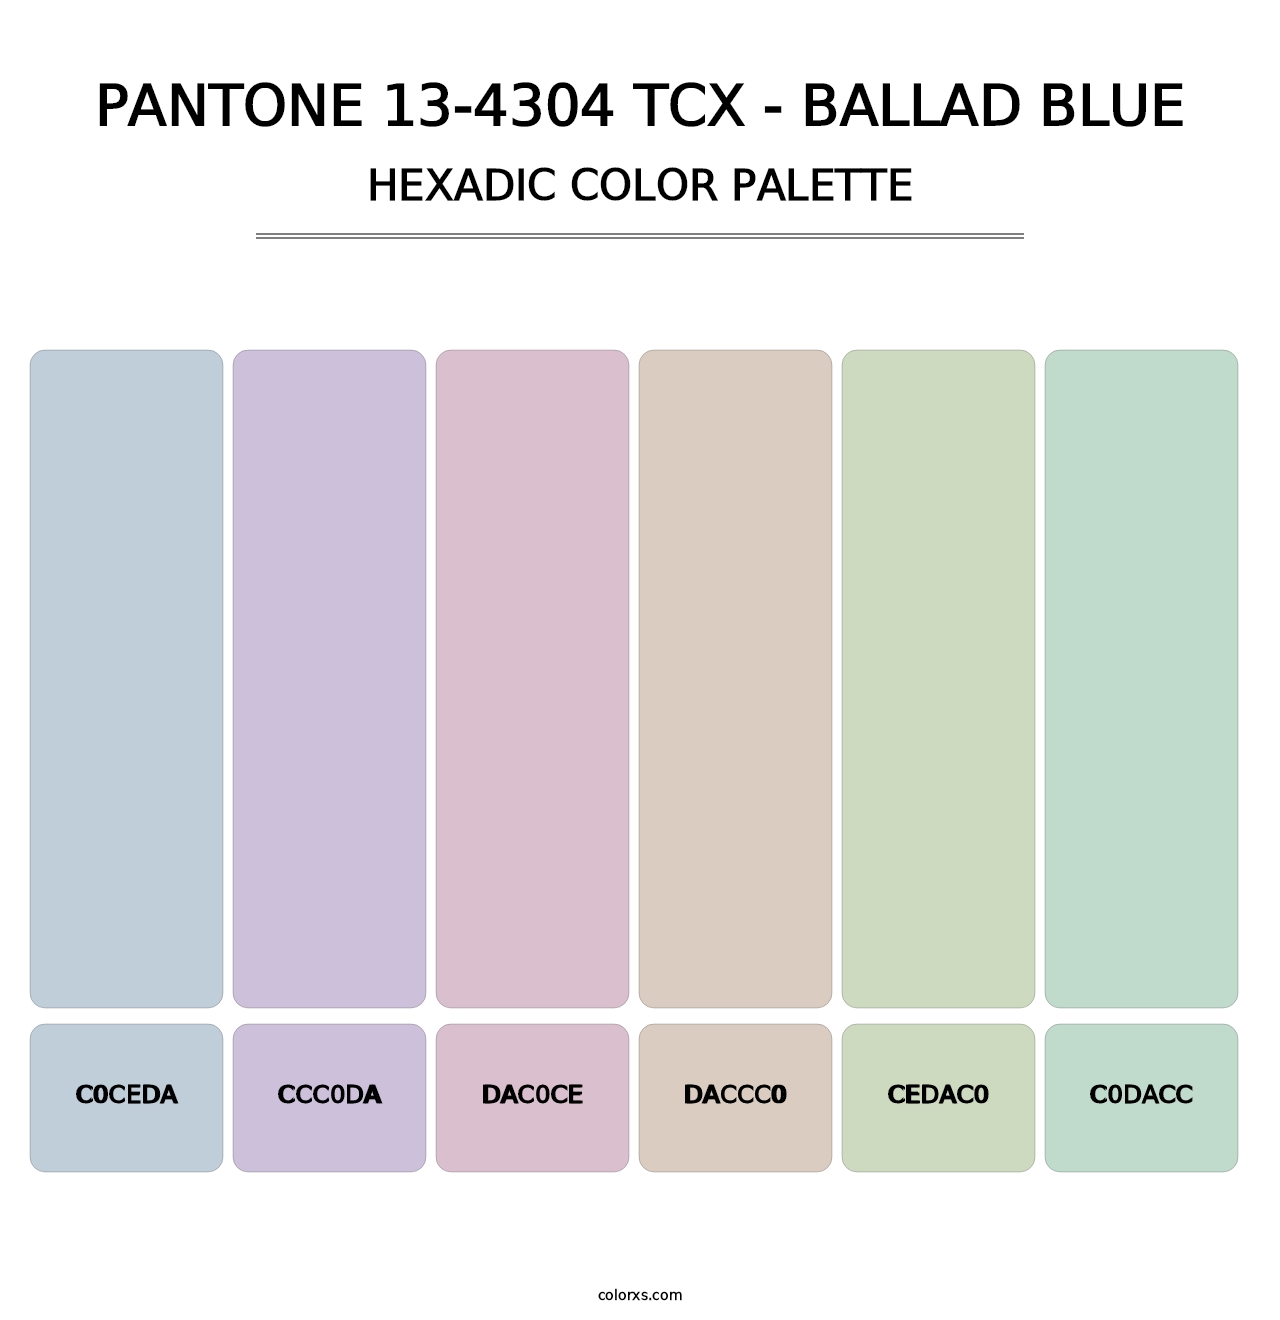 PANTONE 13-4304 TCX - Ballad Blue - Hexadic Color Palette